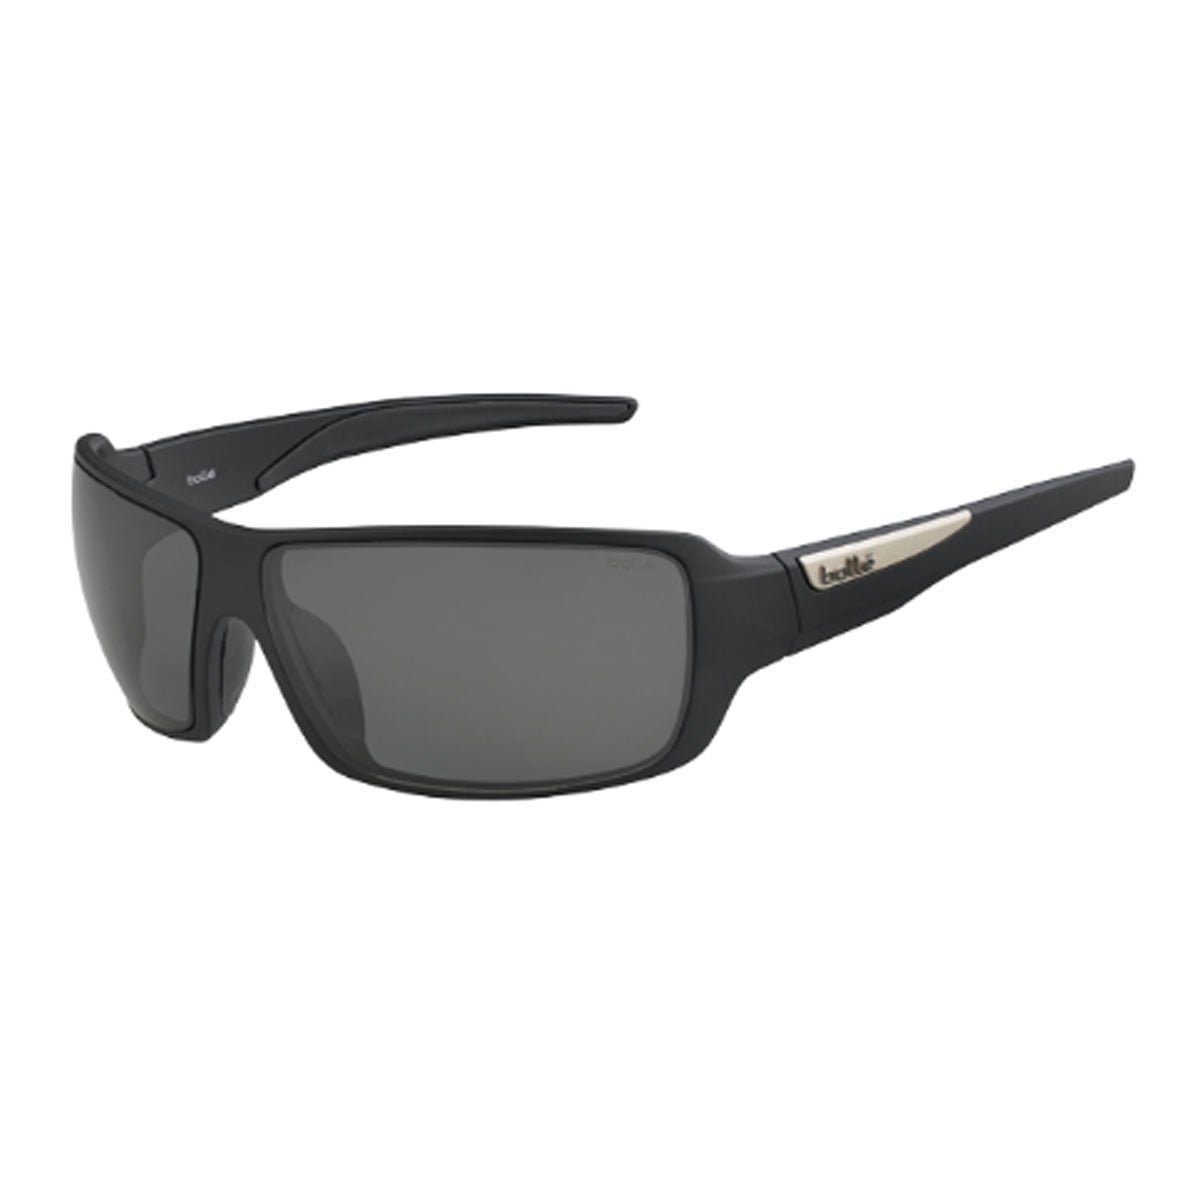 Bolle Cary Matte Black TNS 12216 Sunglasses B-20.3 Lens Medium Thermogrip